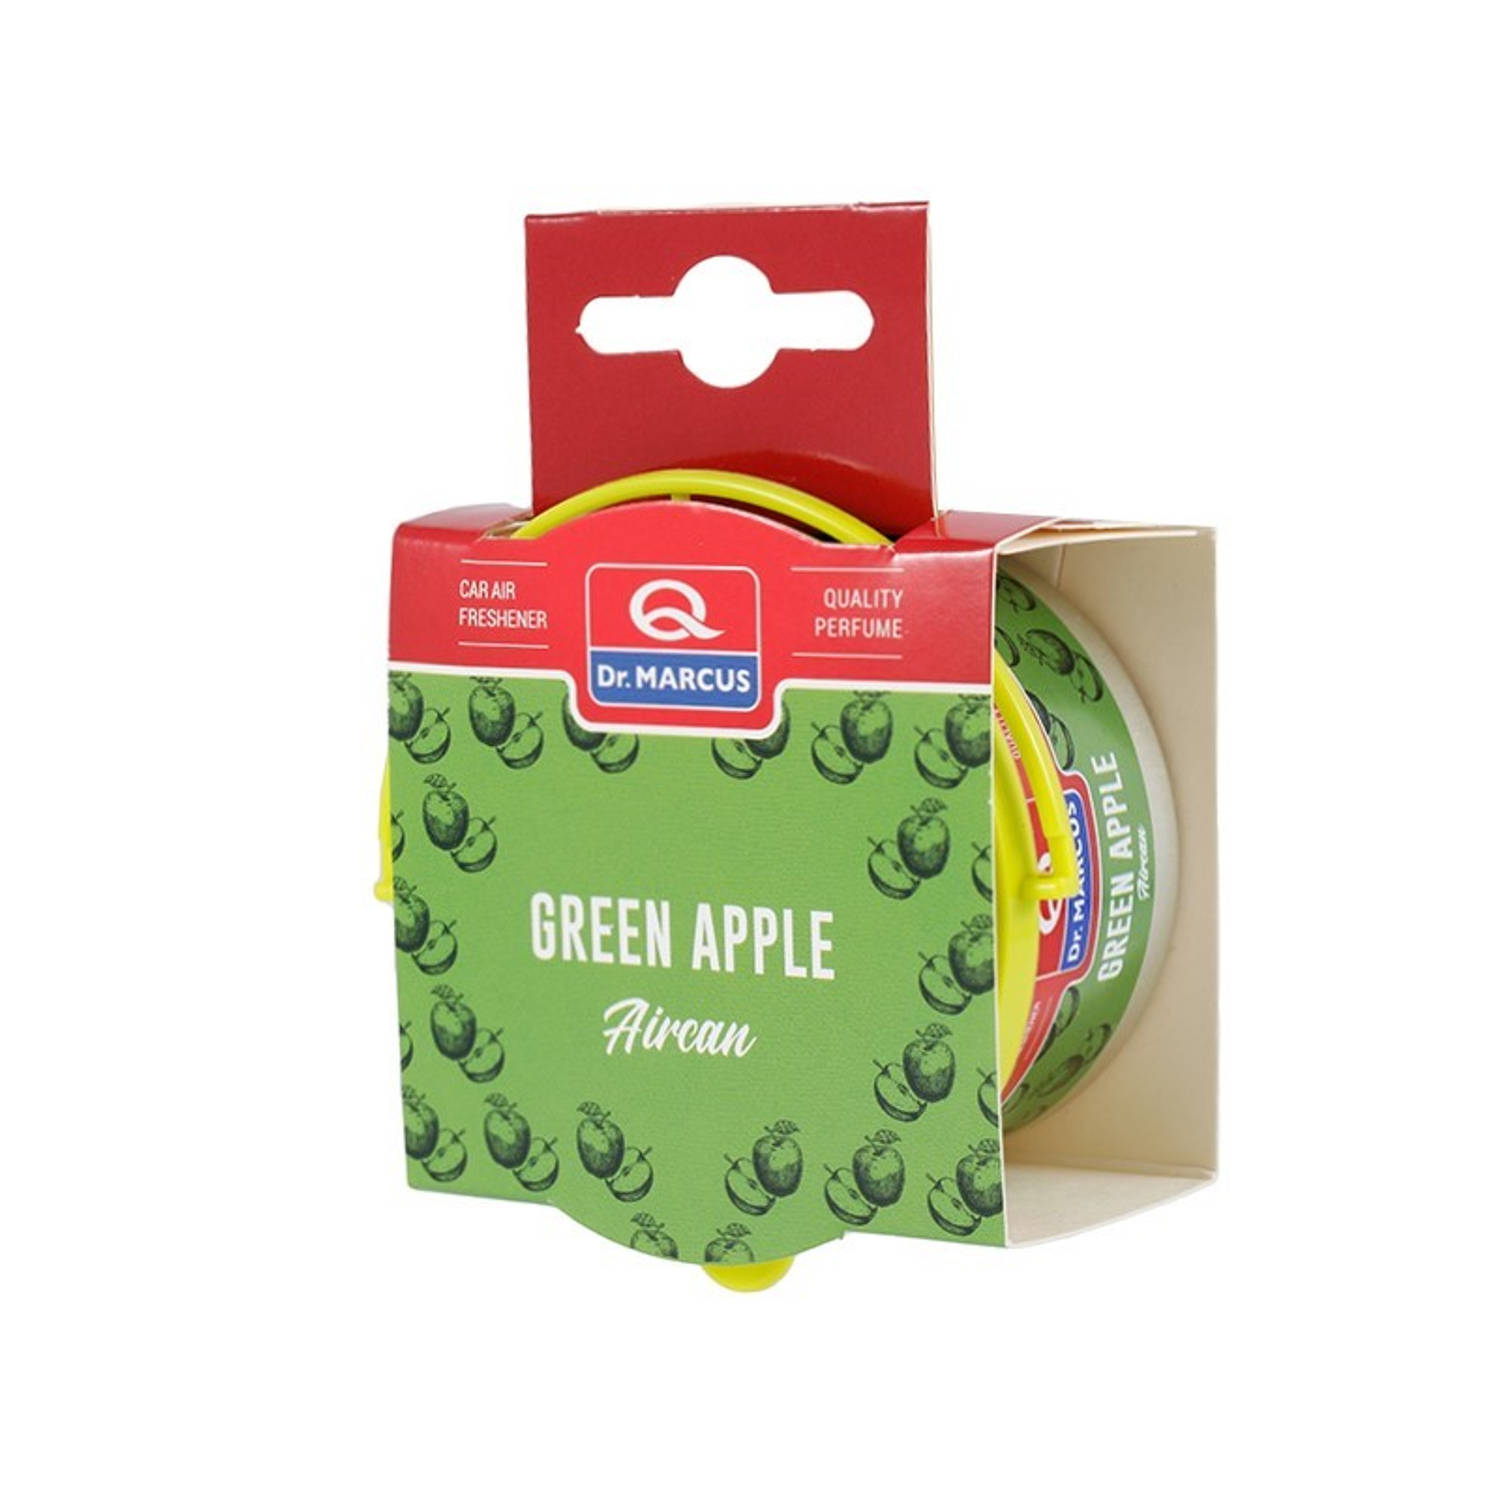 Dr. Marcus Aircan Green Apple luchtverfrisser met neutrafresh technologie 40 gram